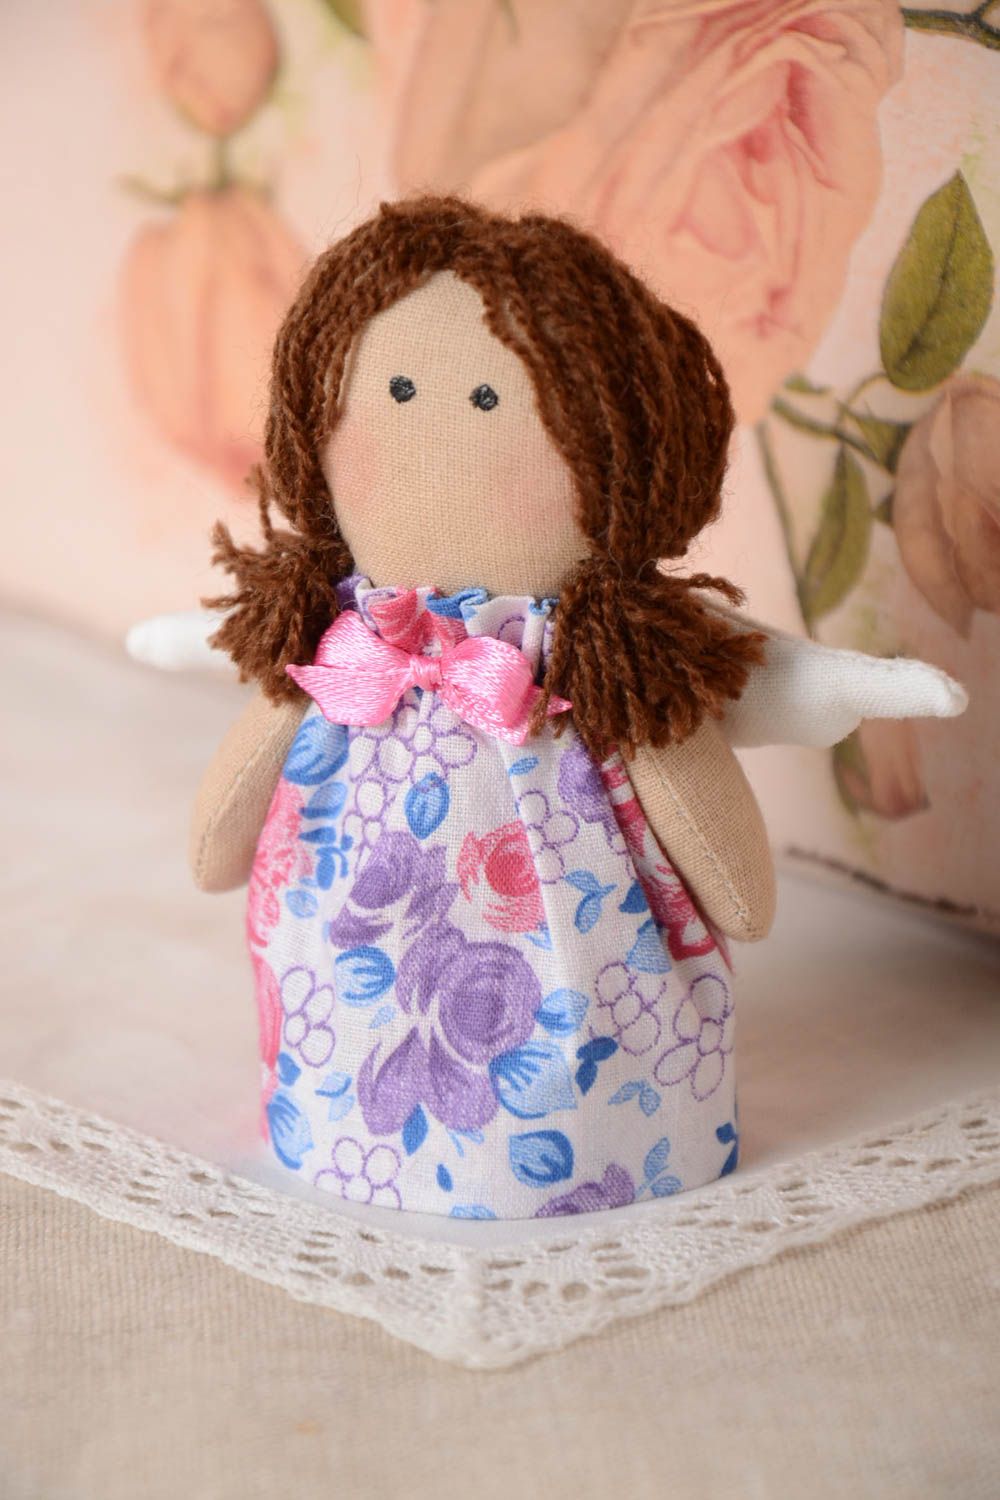 Small homemade fabric interior doll soft rag doll decorative toys gift ideas photo 1